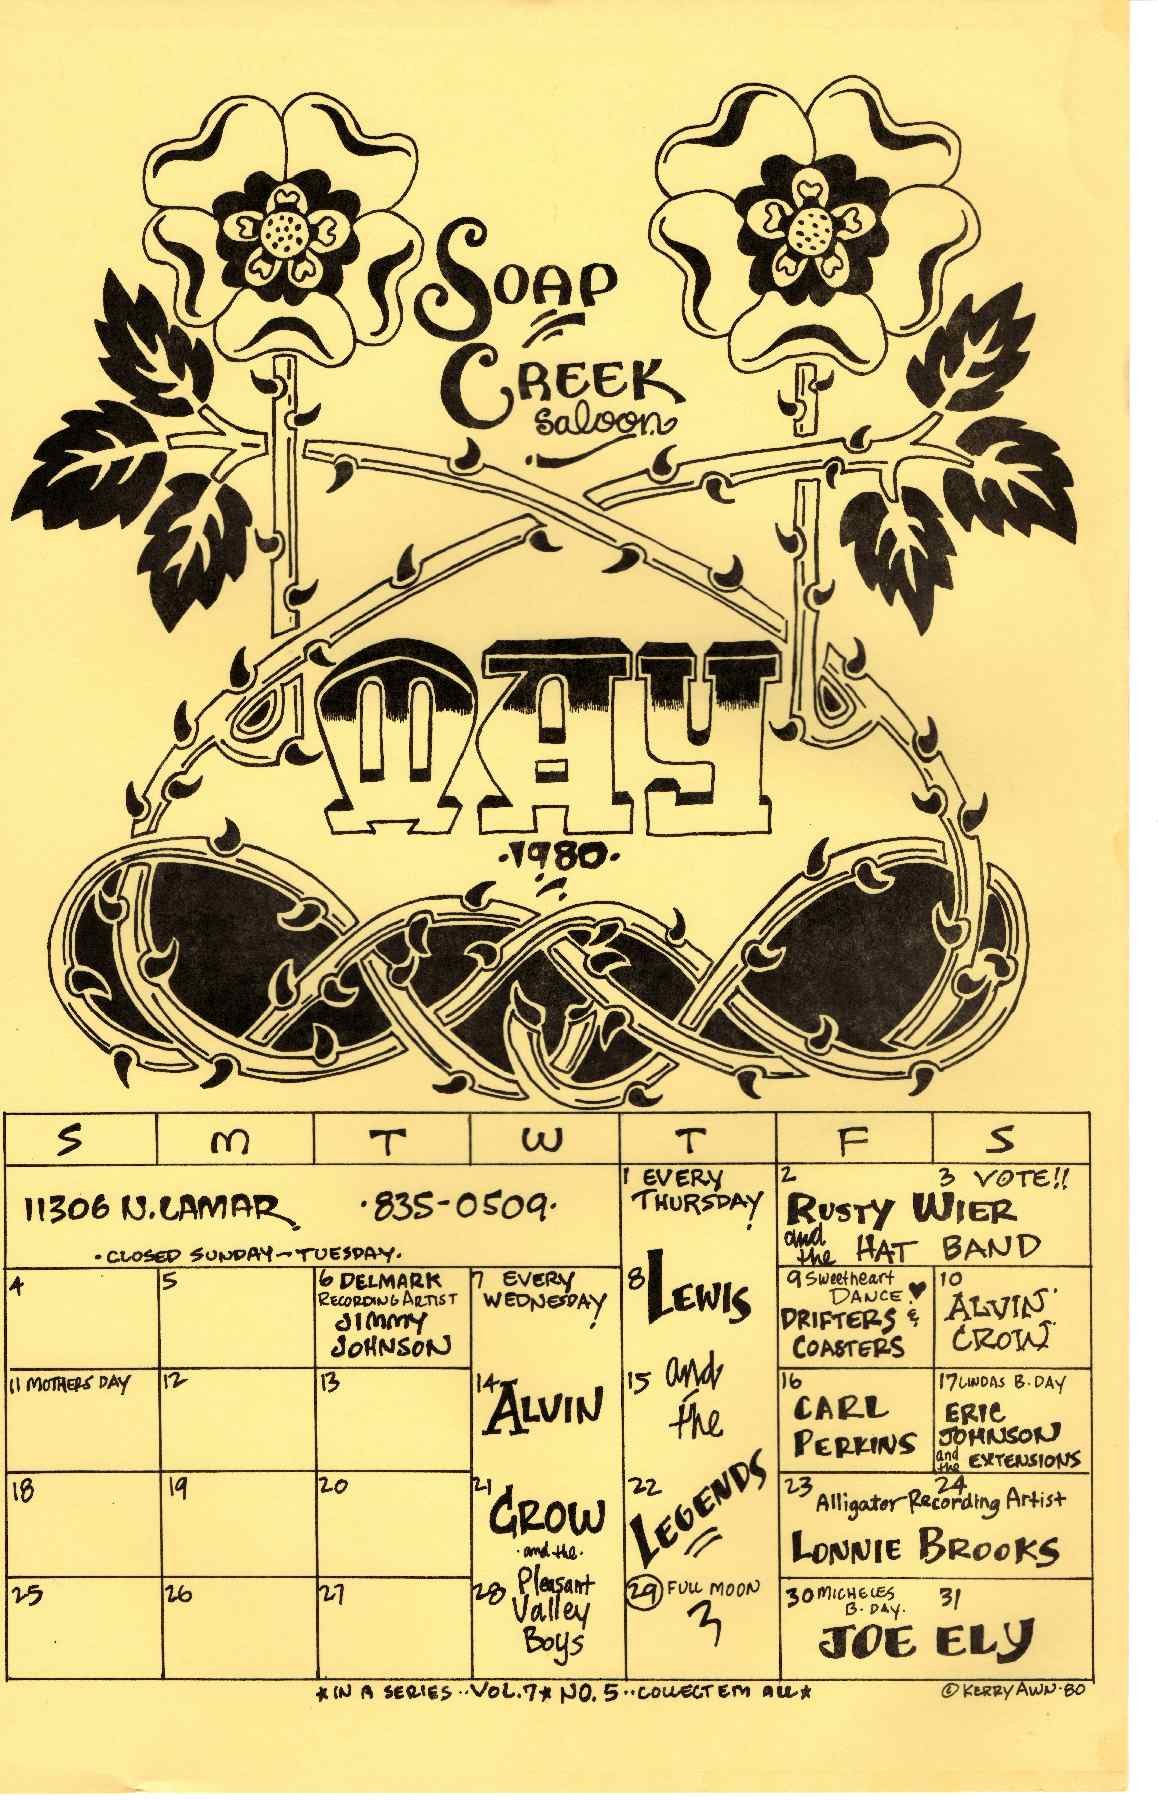 1980.05.May calendar.Soap Creek Saloon.Awn.JPG